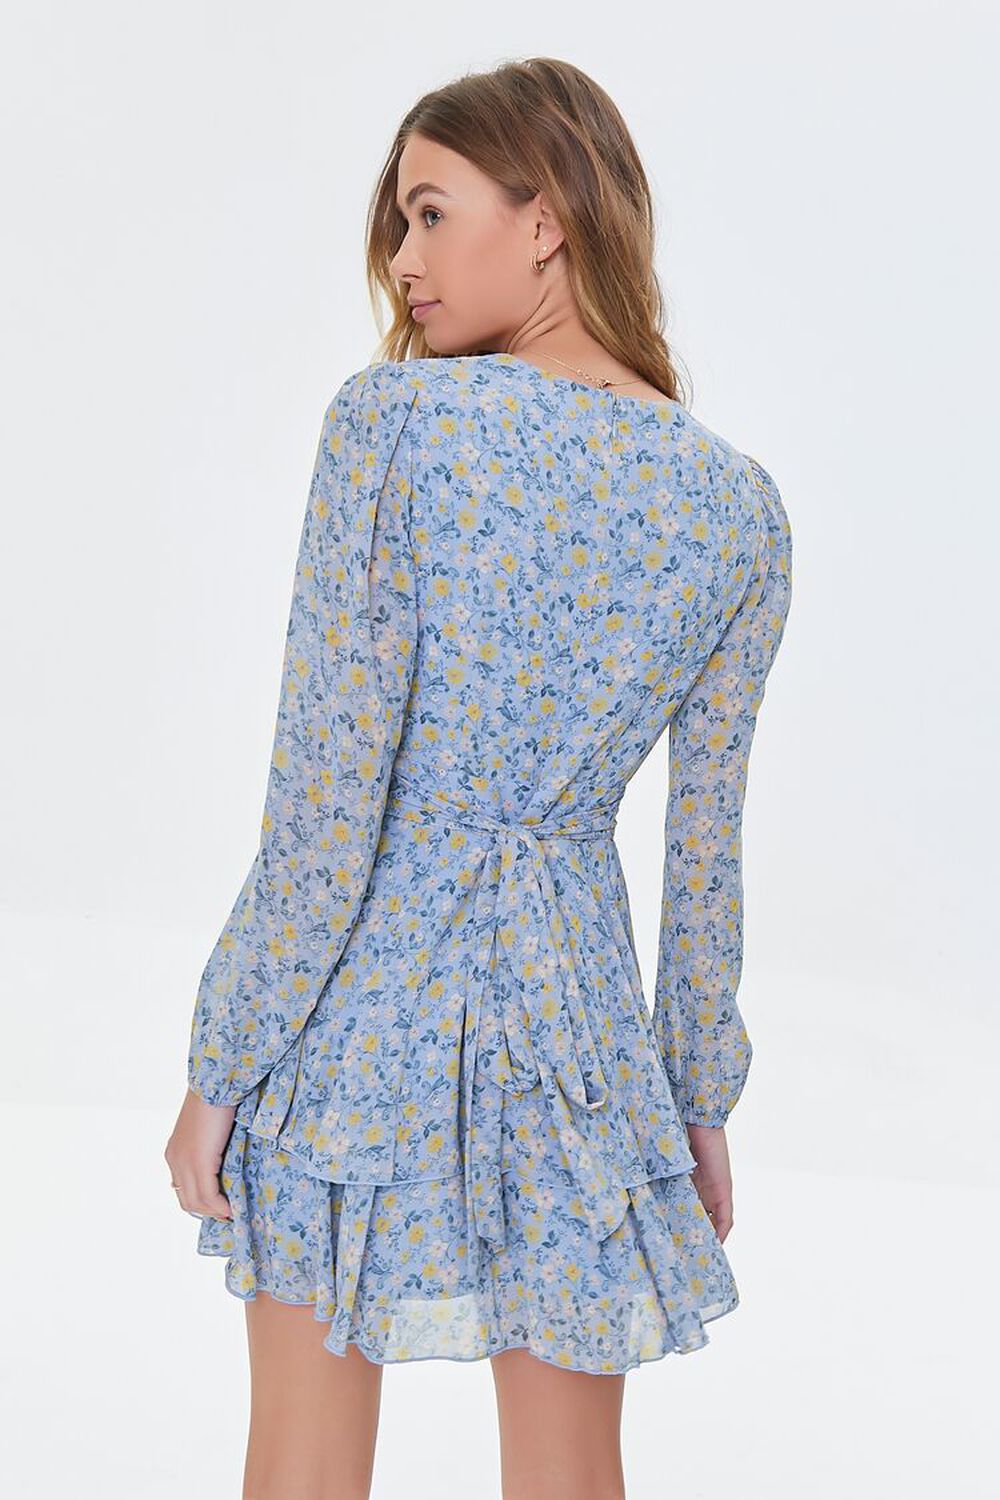 BLUE/MULTI Ditsy Floral Chiffon Mini Dress, image 3